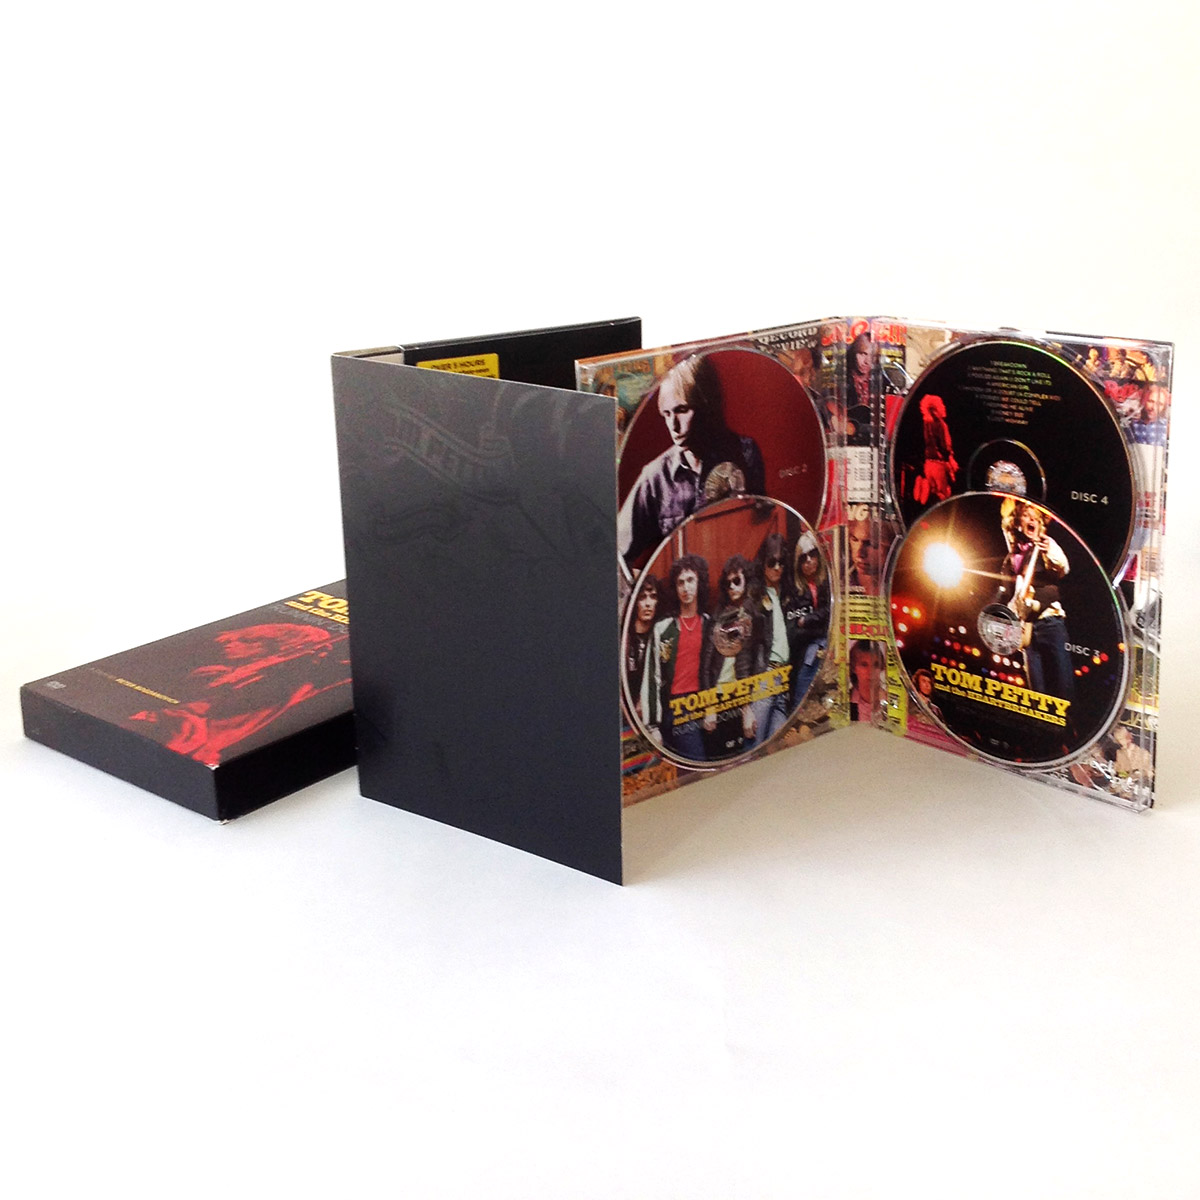 Tom Petty Boxset Open - DVD Replication by OMM